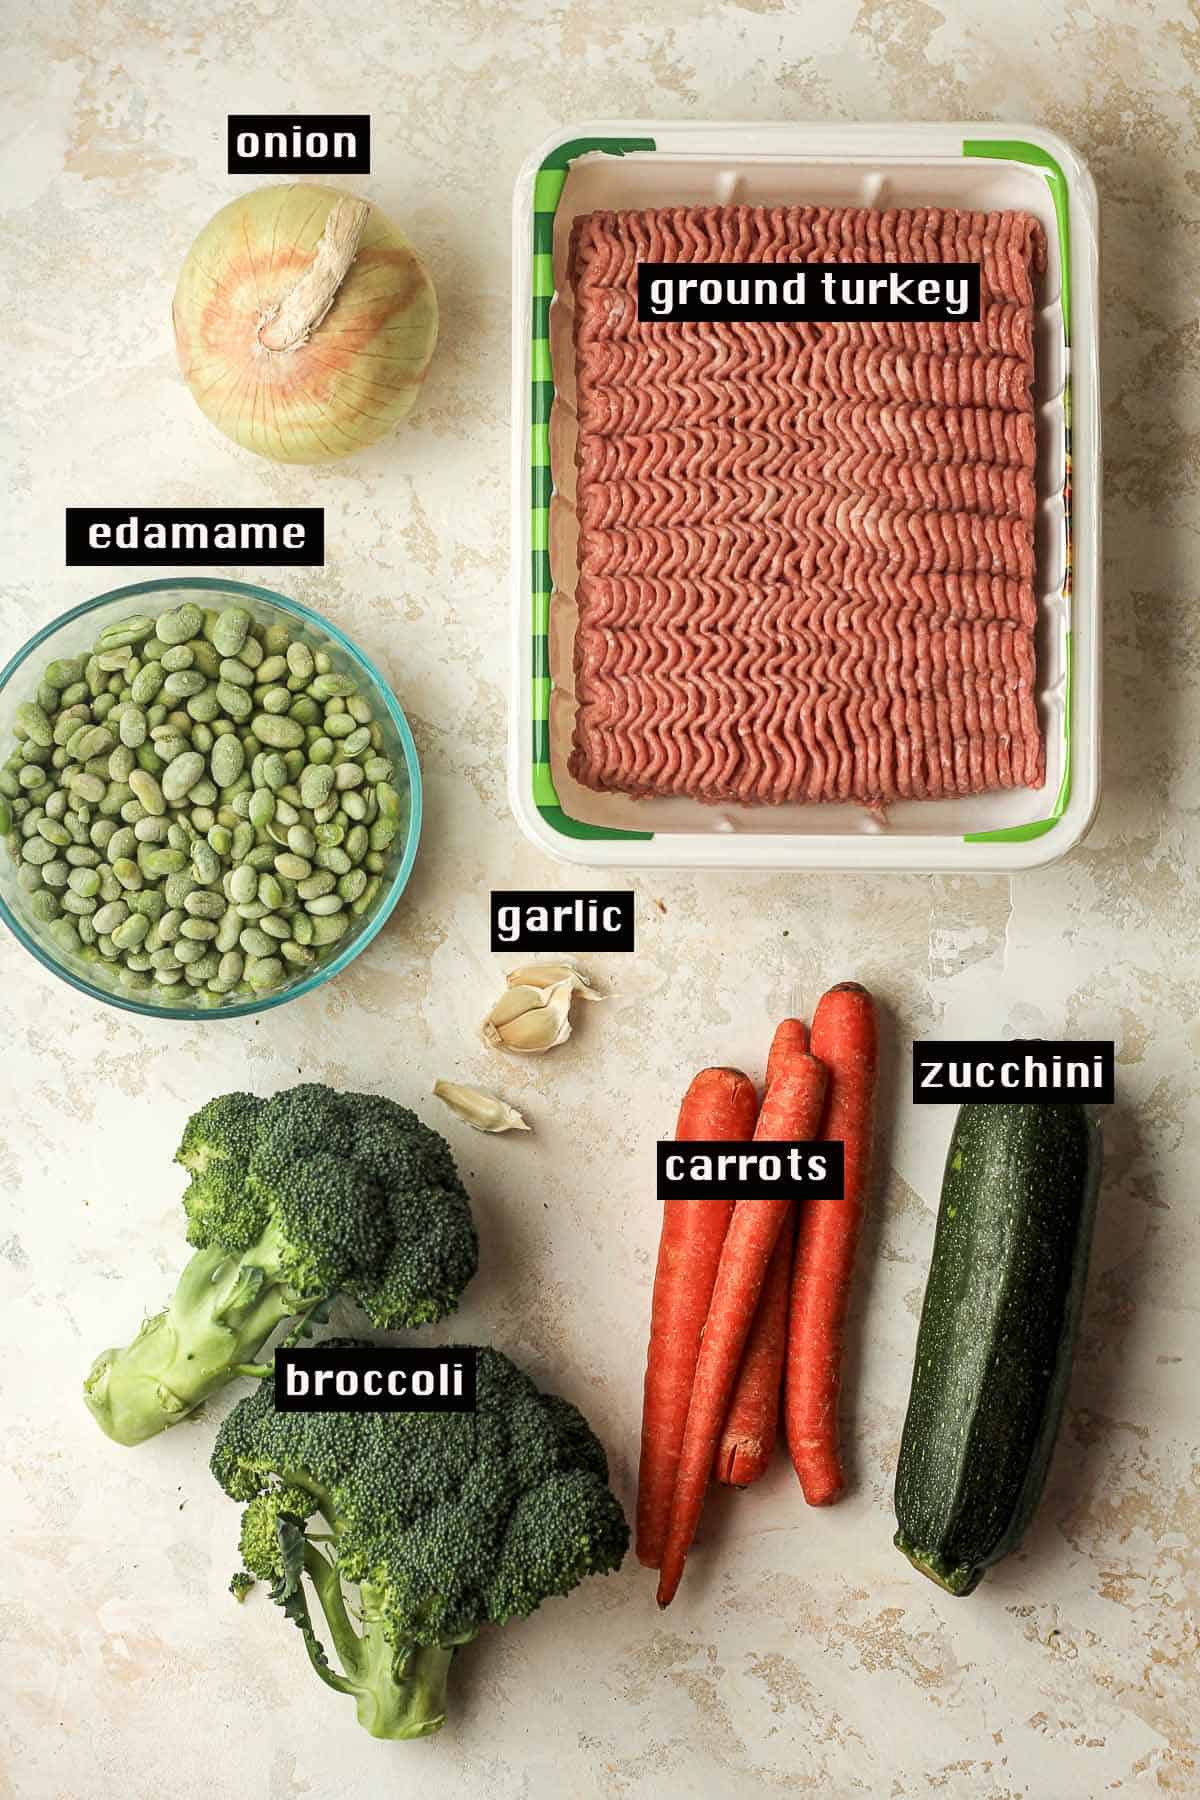 The ingredients for teriyaki turkey bowls.